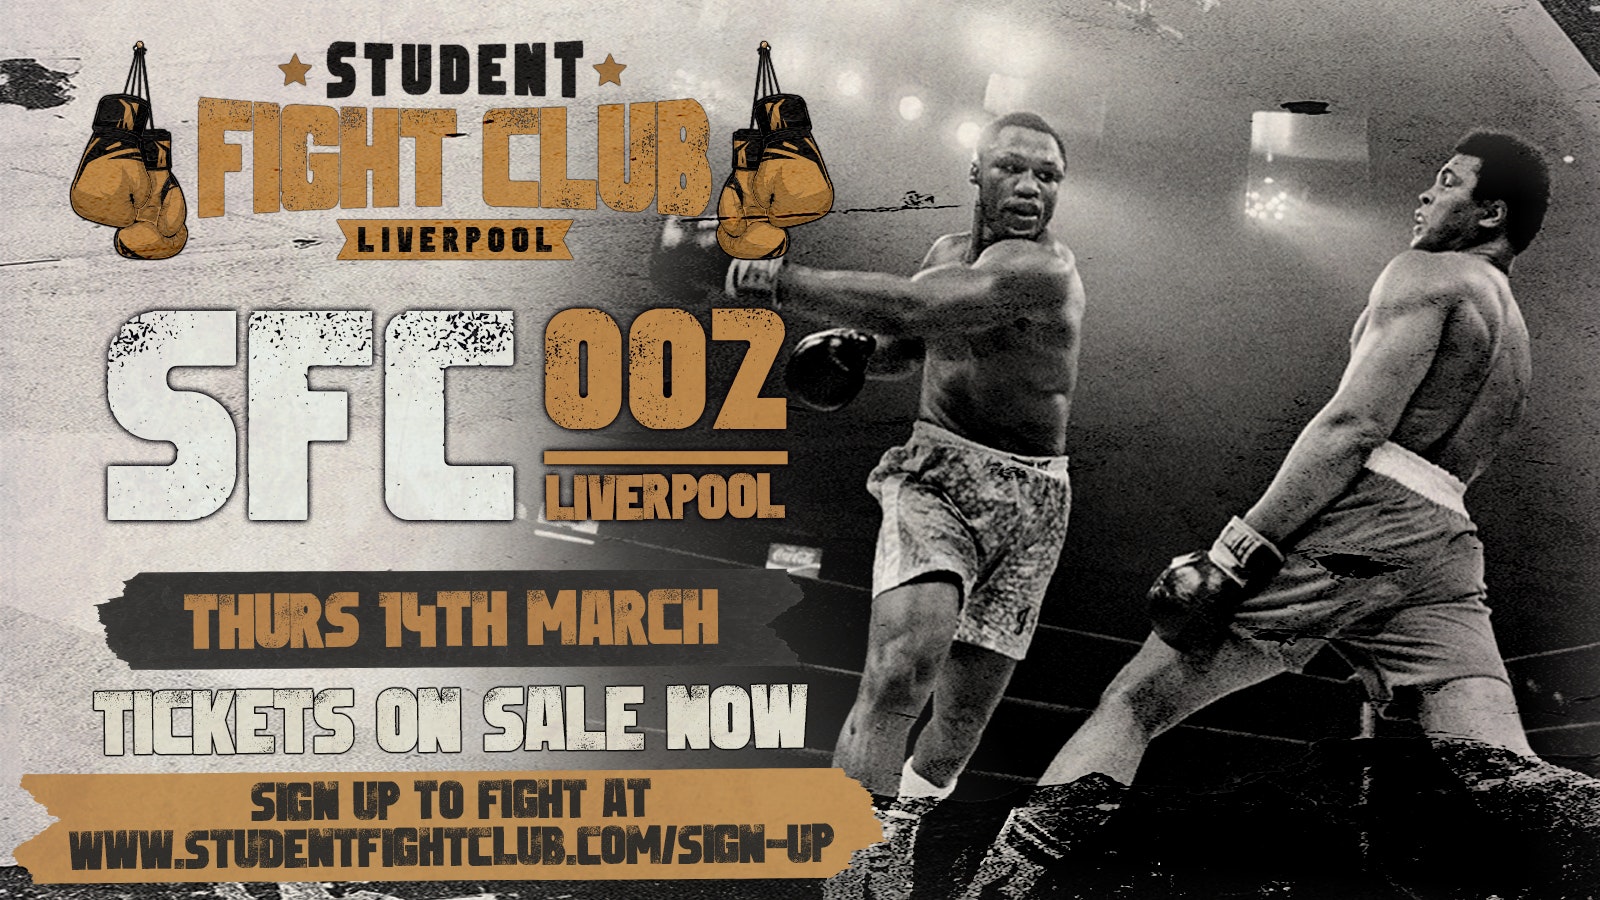 SFC002 : Student Fight Club Liverpool